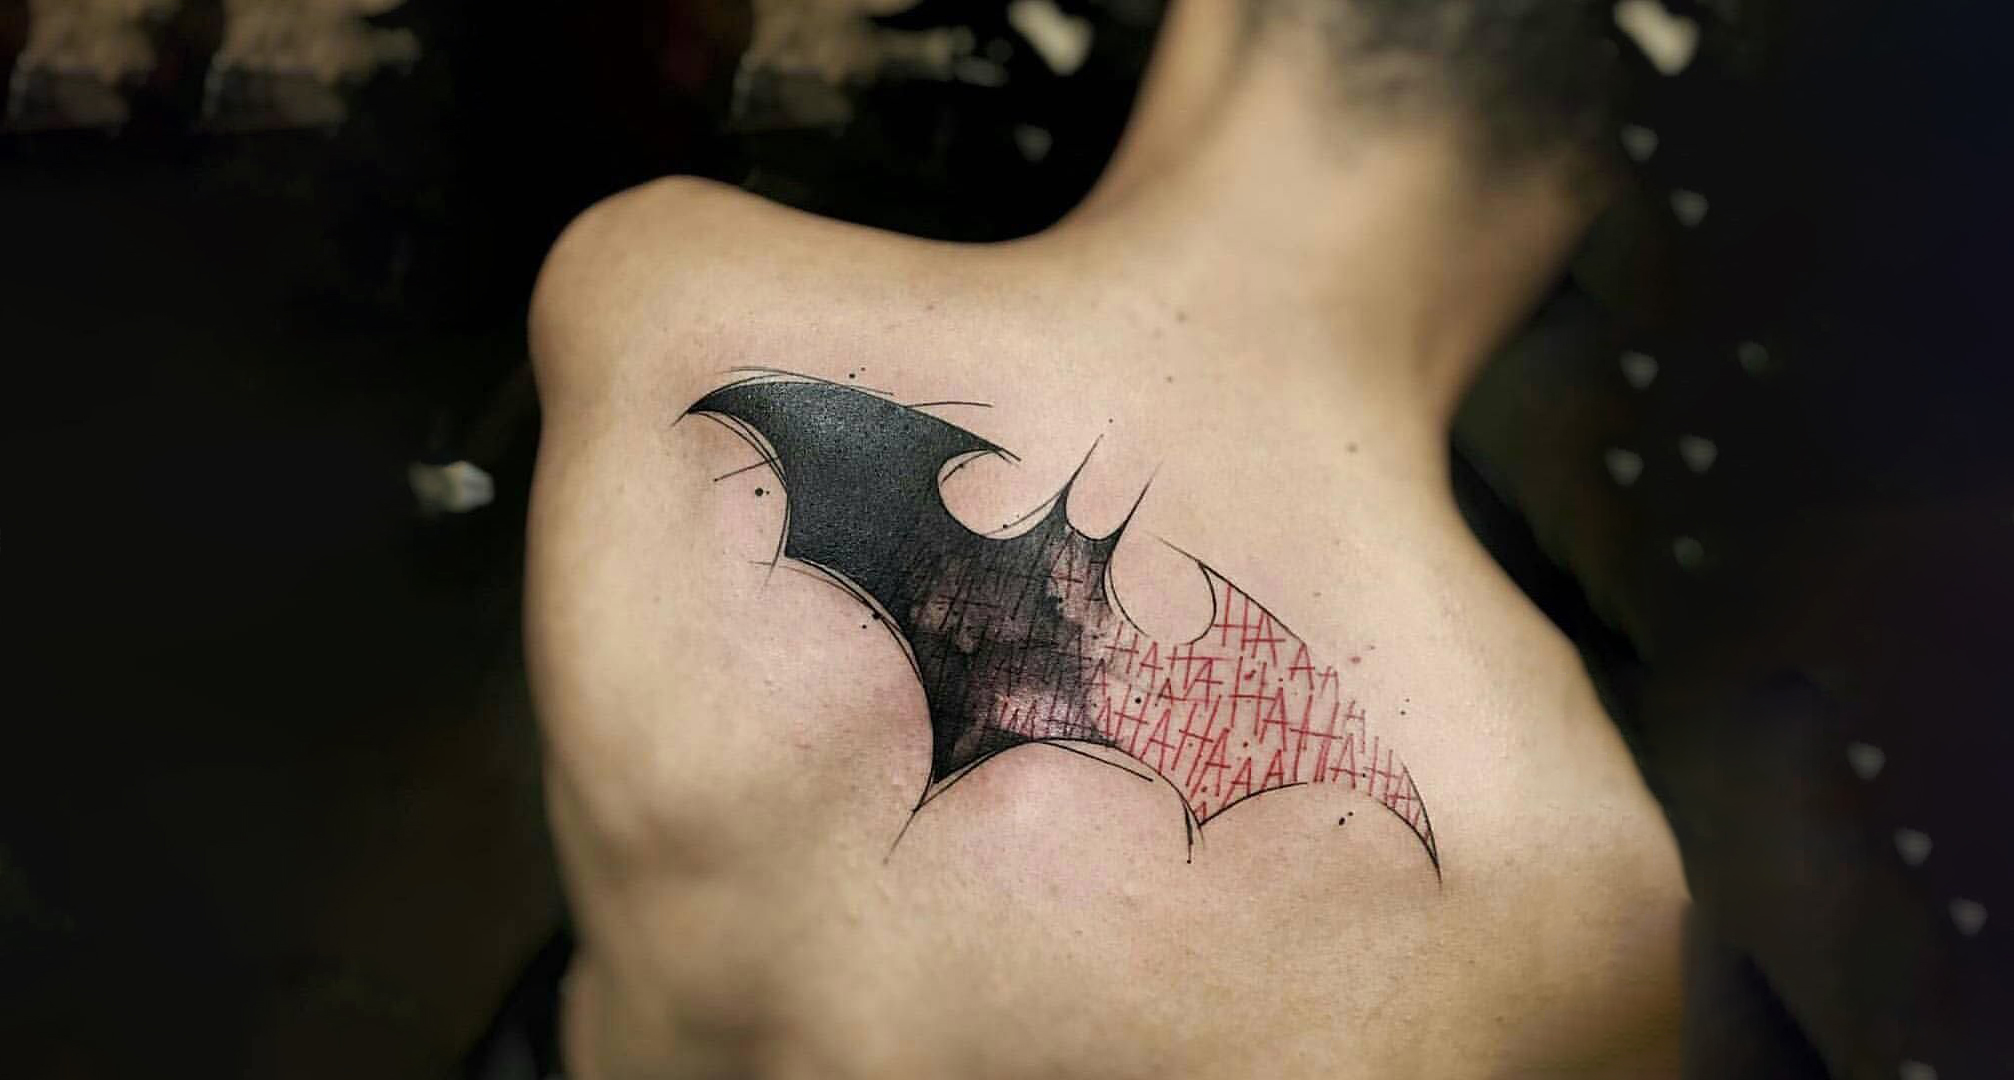 About Kane Browns Batman Tattoo